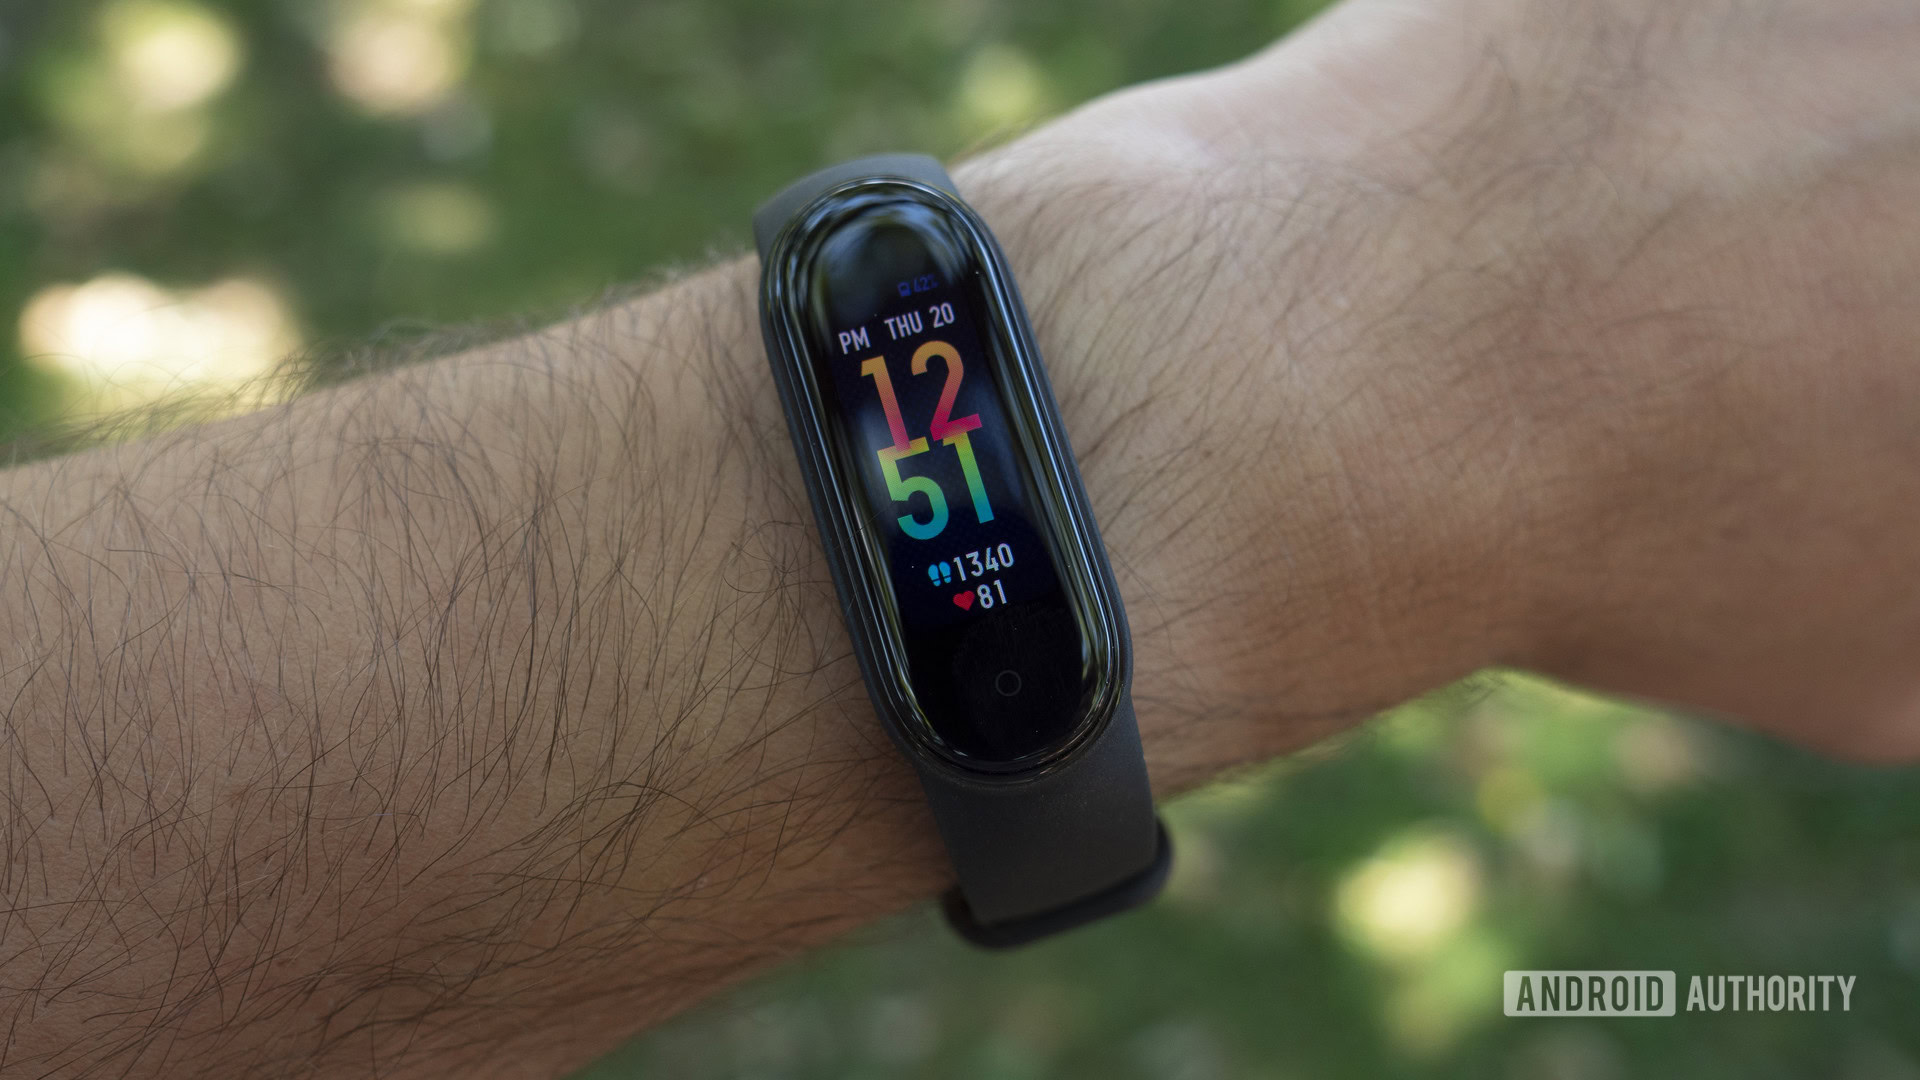 Xiaomi Mi Band 5 Smart Watch - Black for sale online